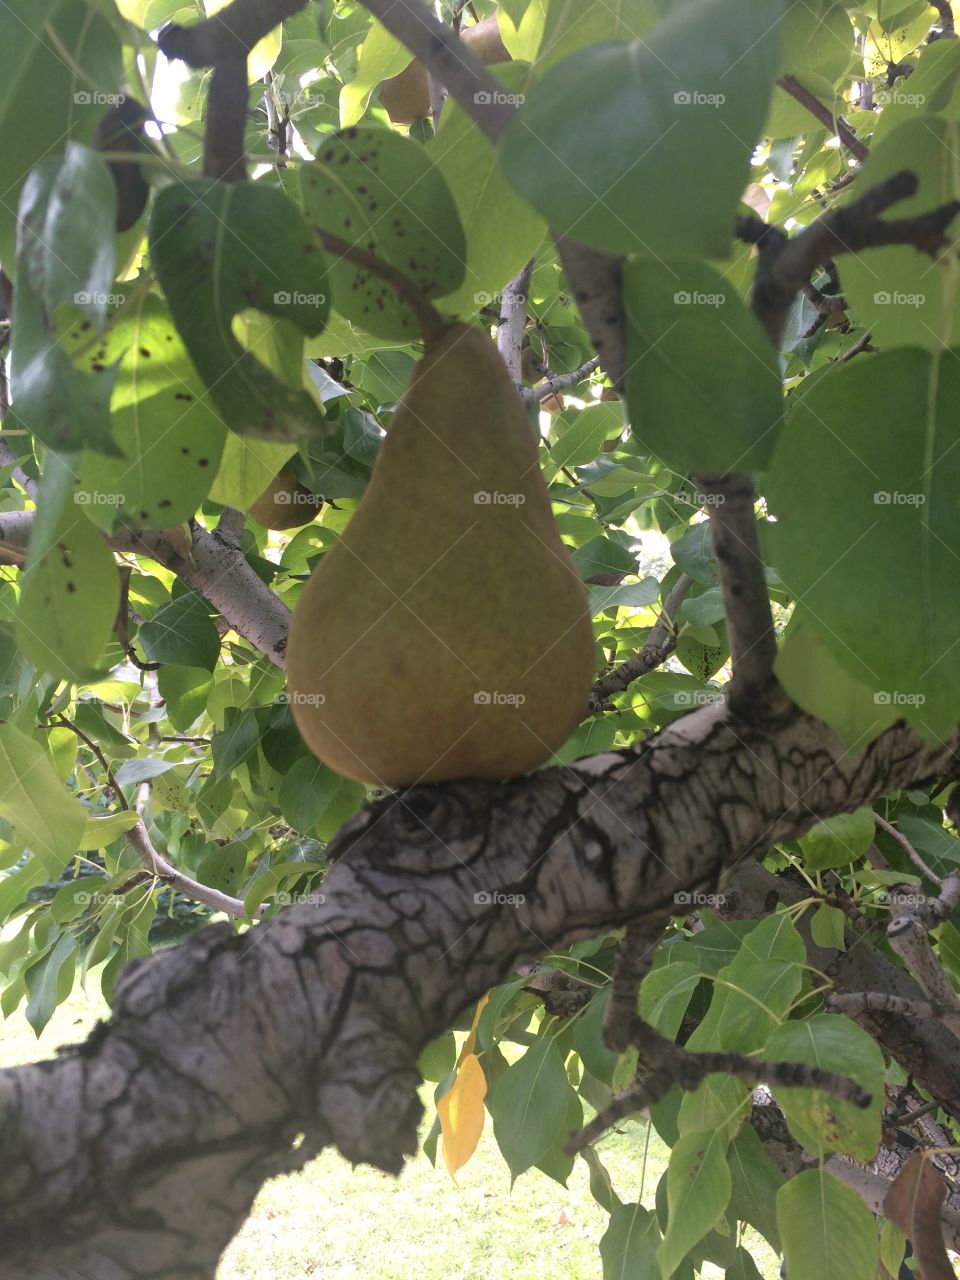 The lazy pear